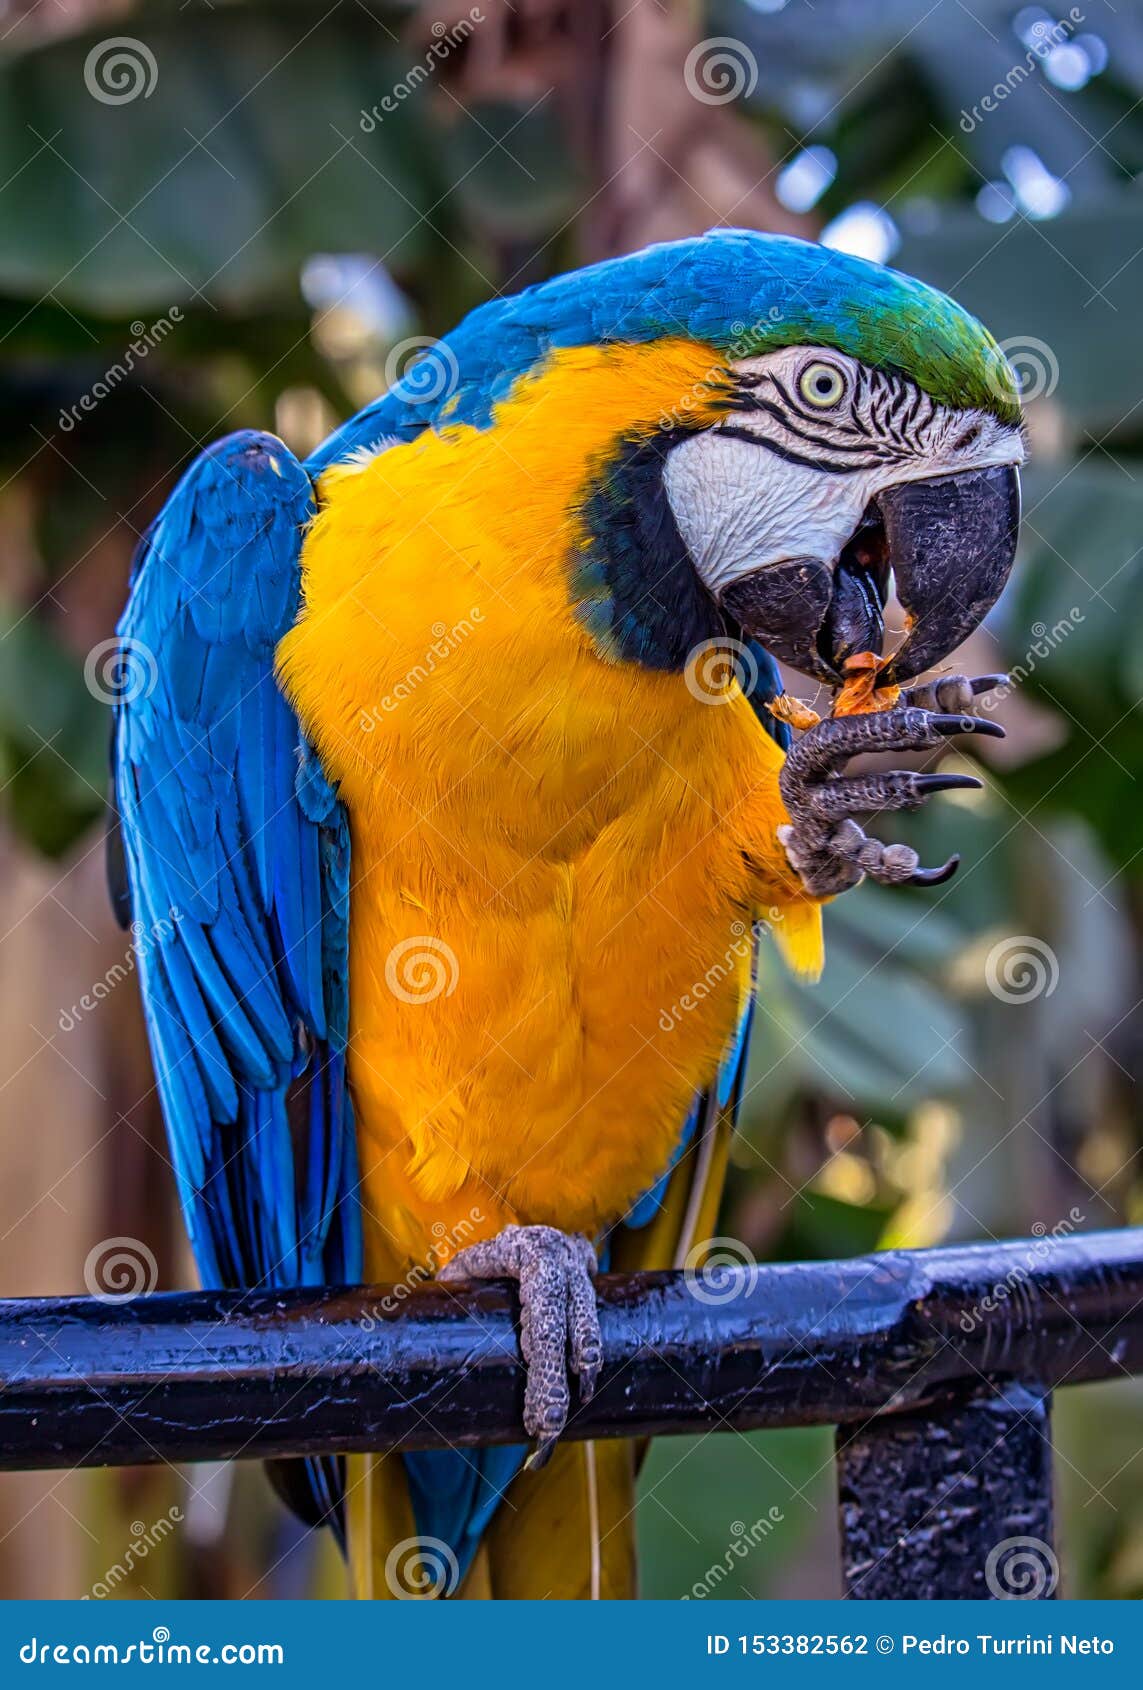 Putte Diverse varer dvs. Bird Ara Ararauna, Blue and Yellow Macaw Aka Arara Caninde, Exotic  Brazilian Bird Stock Photo - Image of beak, macaw: 153382562